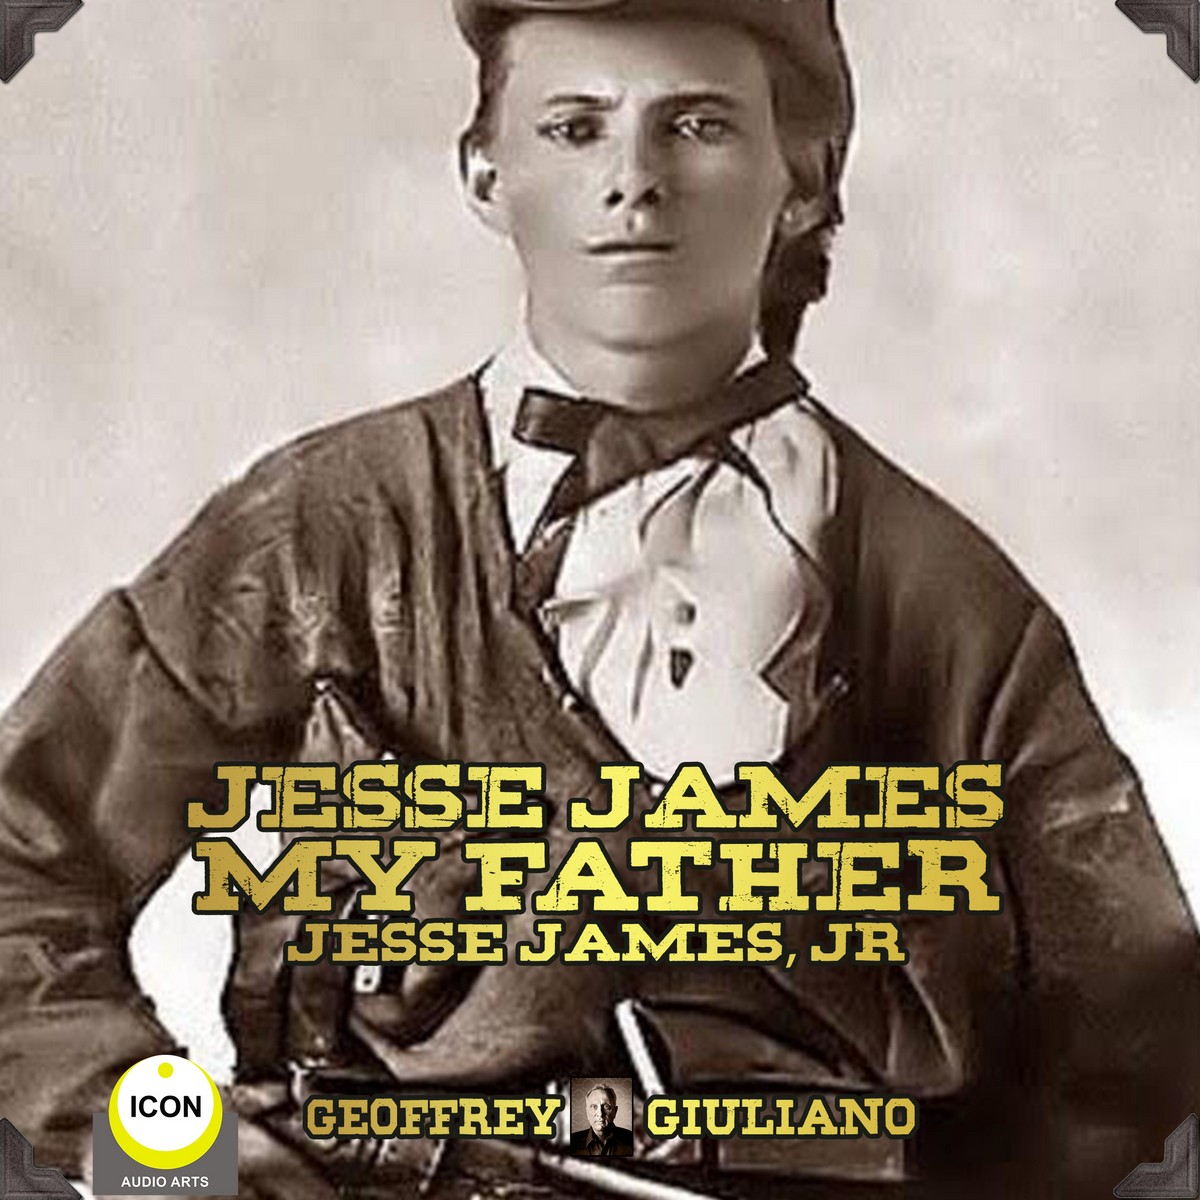 Jesse James My Father – Jesse James, Jr.